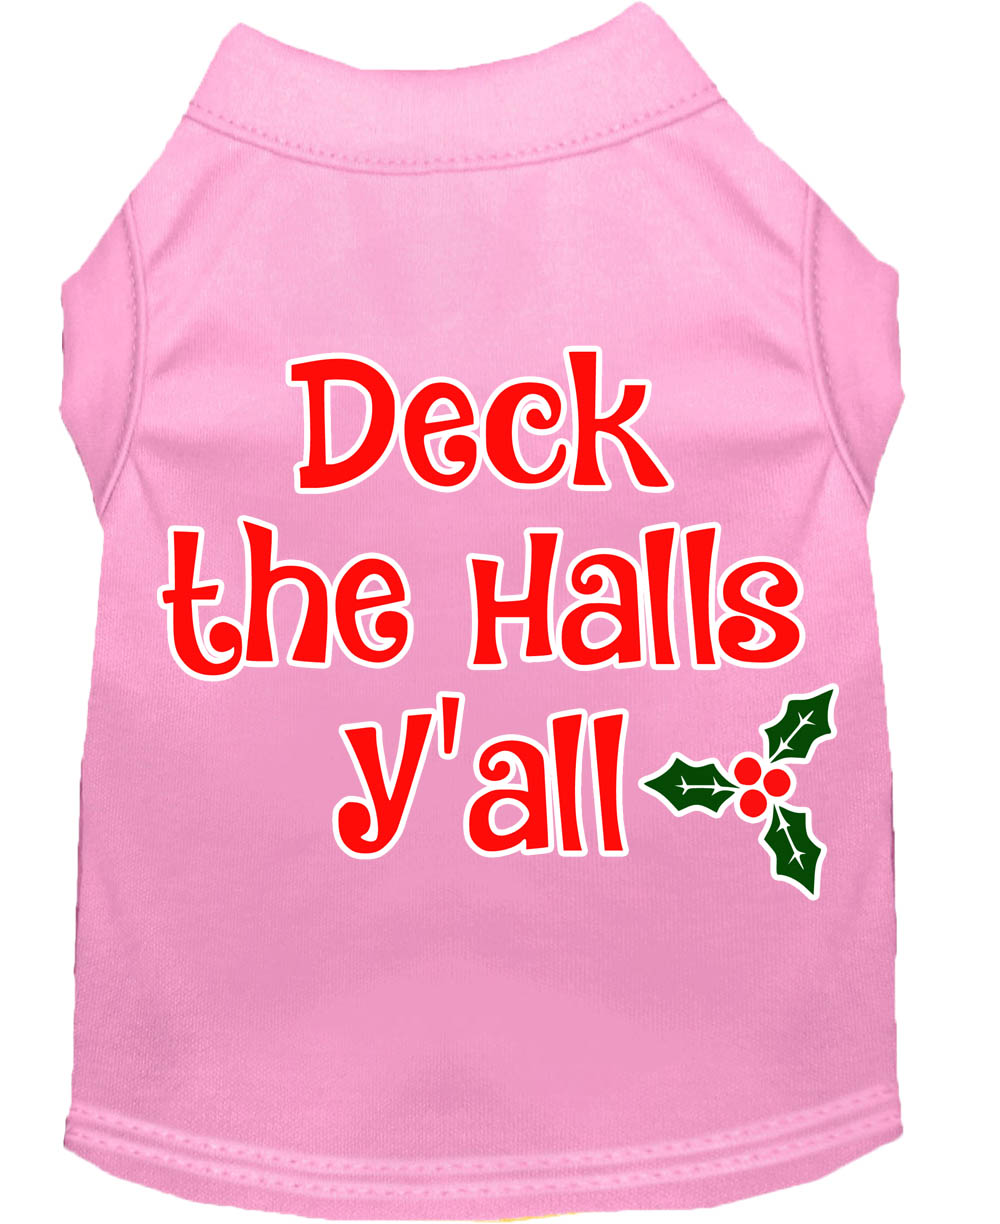 Deck the Halls Y'all Screen Print Dog Shirt Light Pink Lg